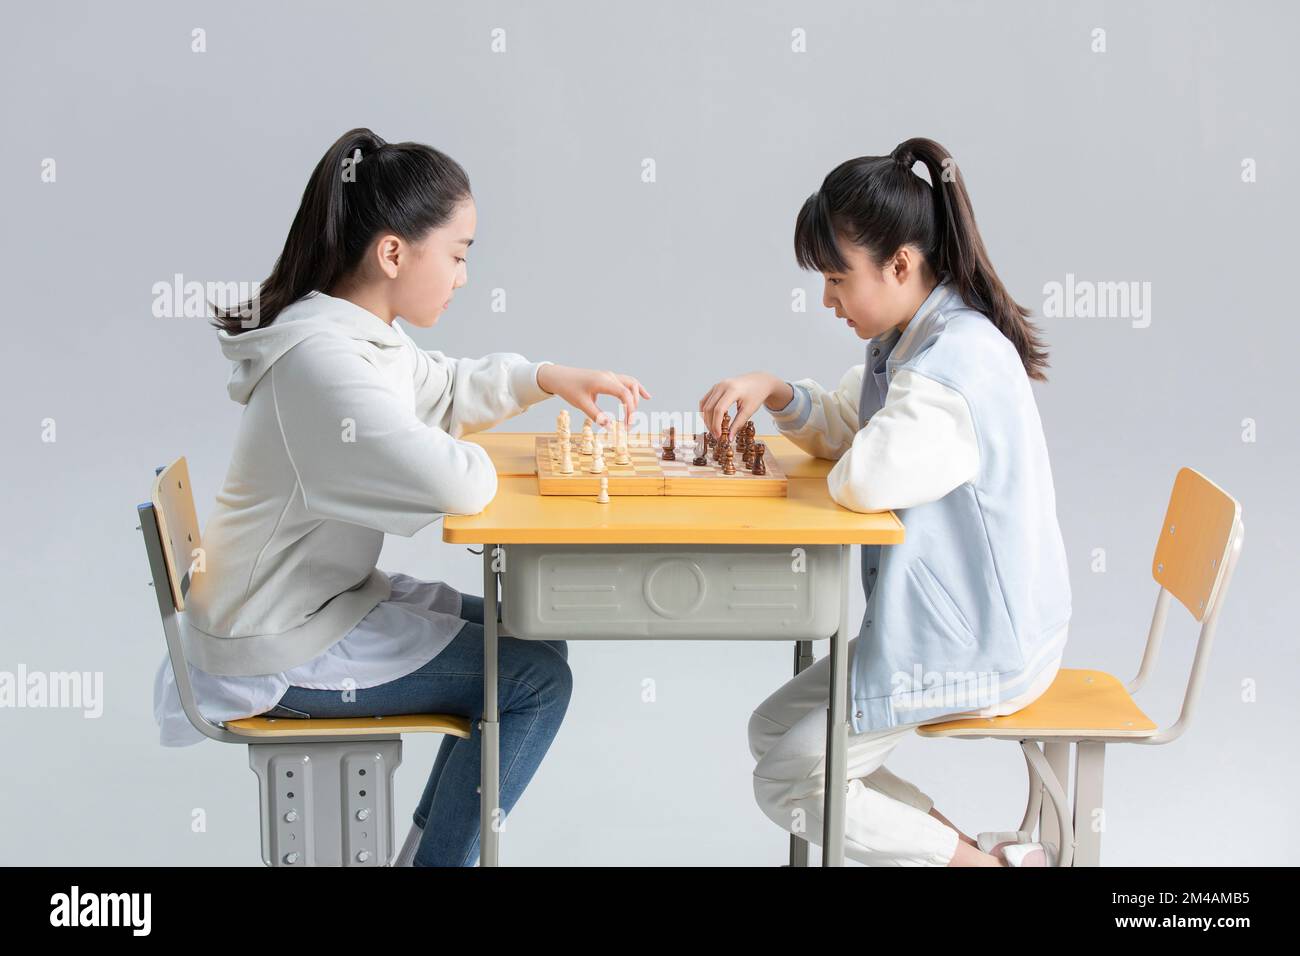 Two Chinese girls playing chess Stock Photo